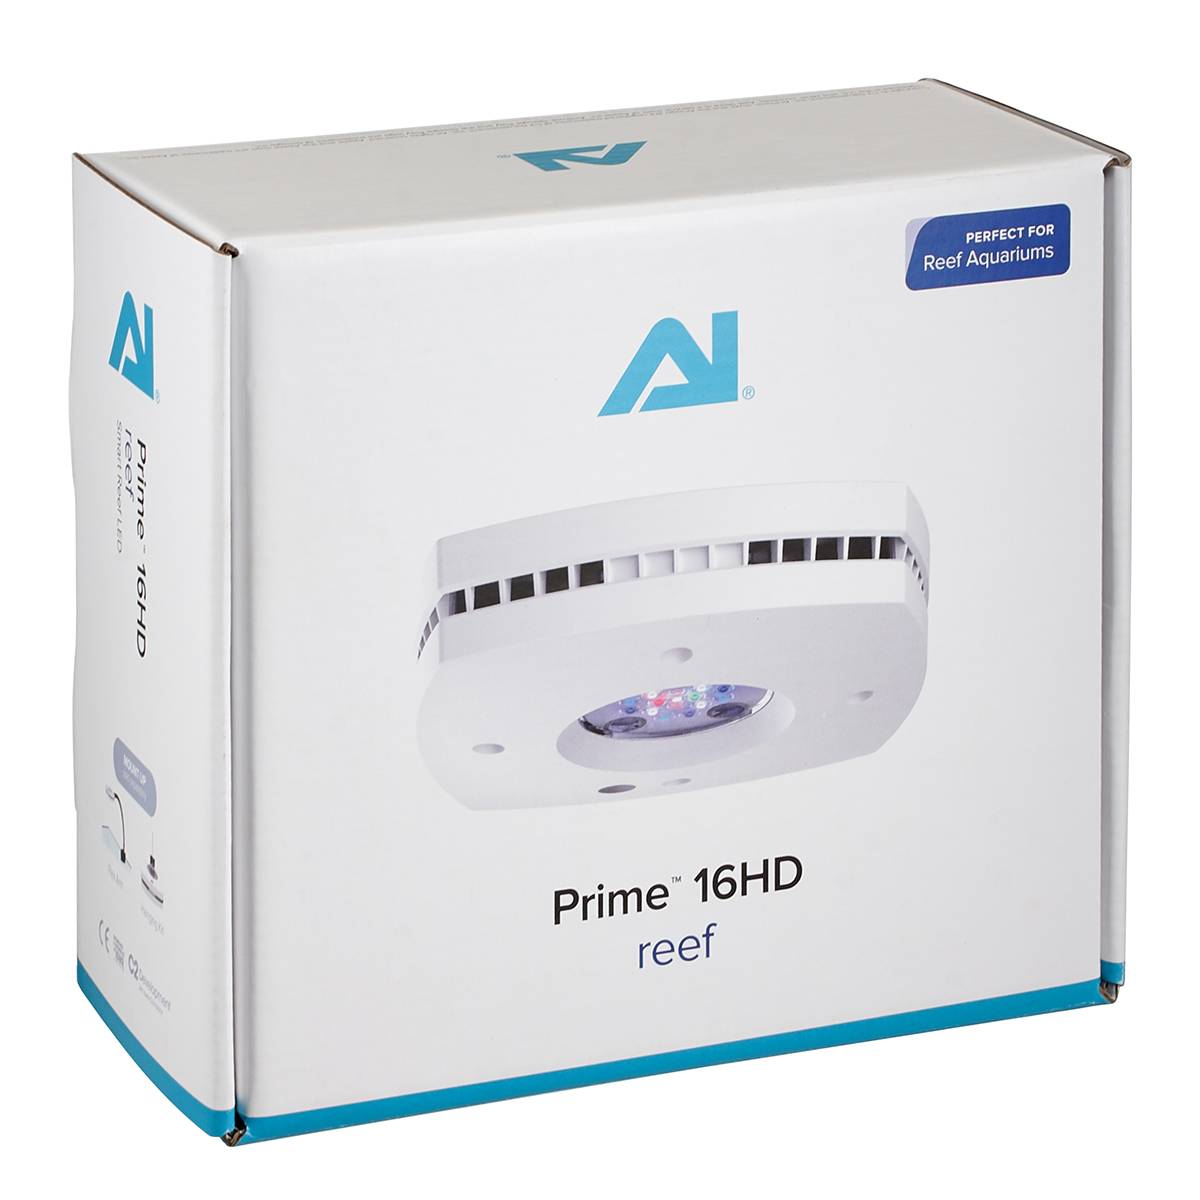 Prime 16 HD LED Reef Light - White Body - Aqua Illumination - Aqua Illumination - Aqua Illumination